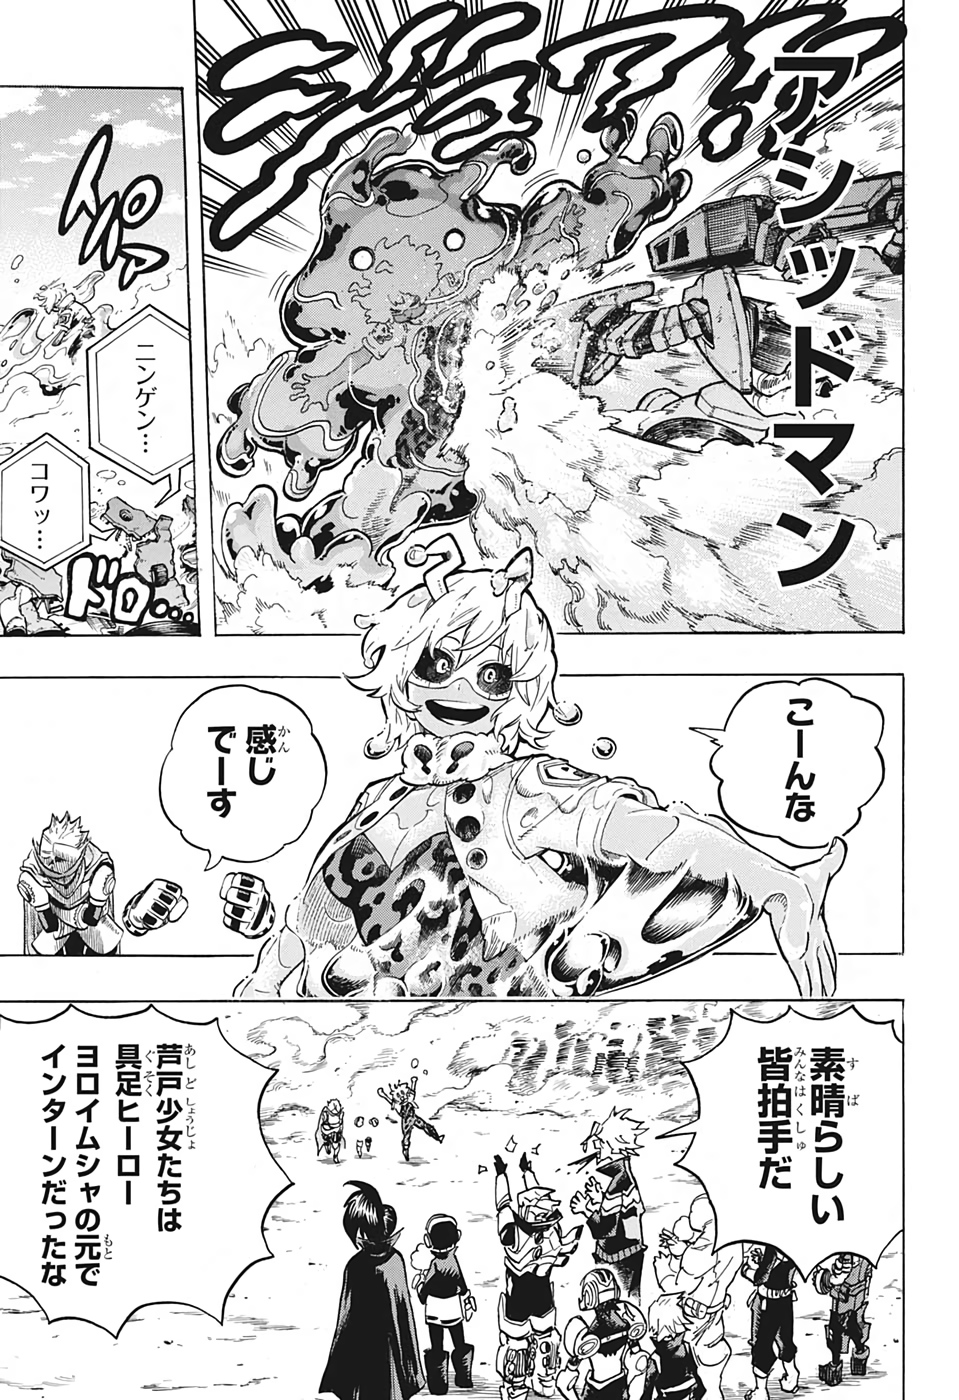 Boku no Hero Academia - Chapter 256 - Page 3